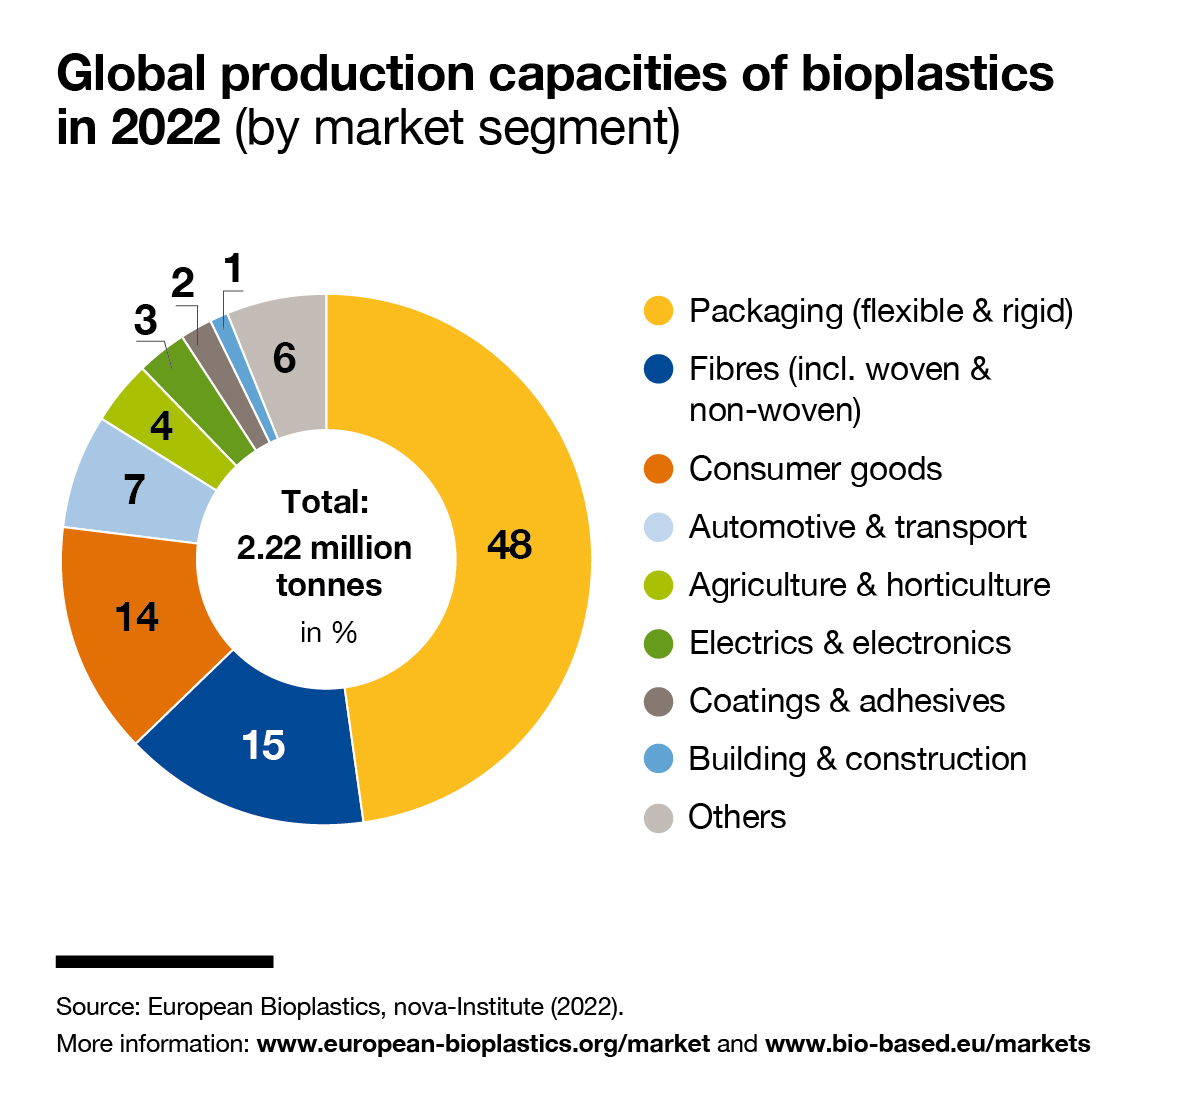 Global production capacities of bioplastics in 2022 (by market segment)